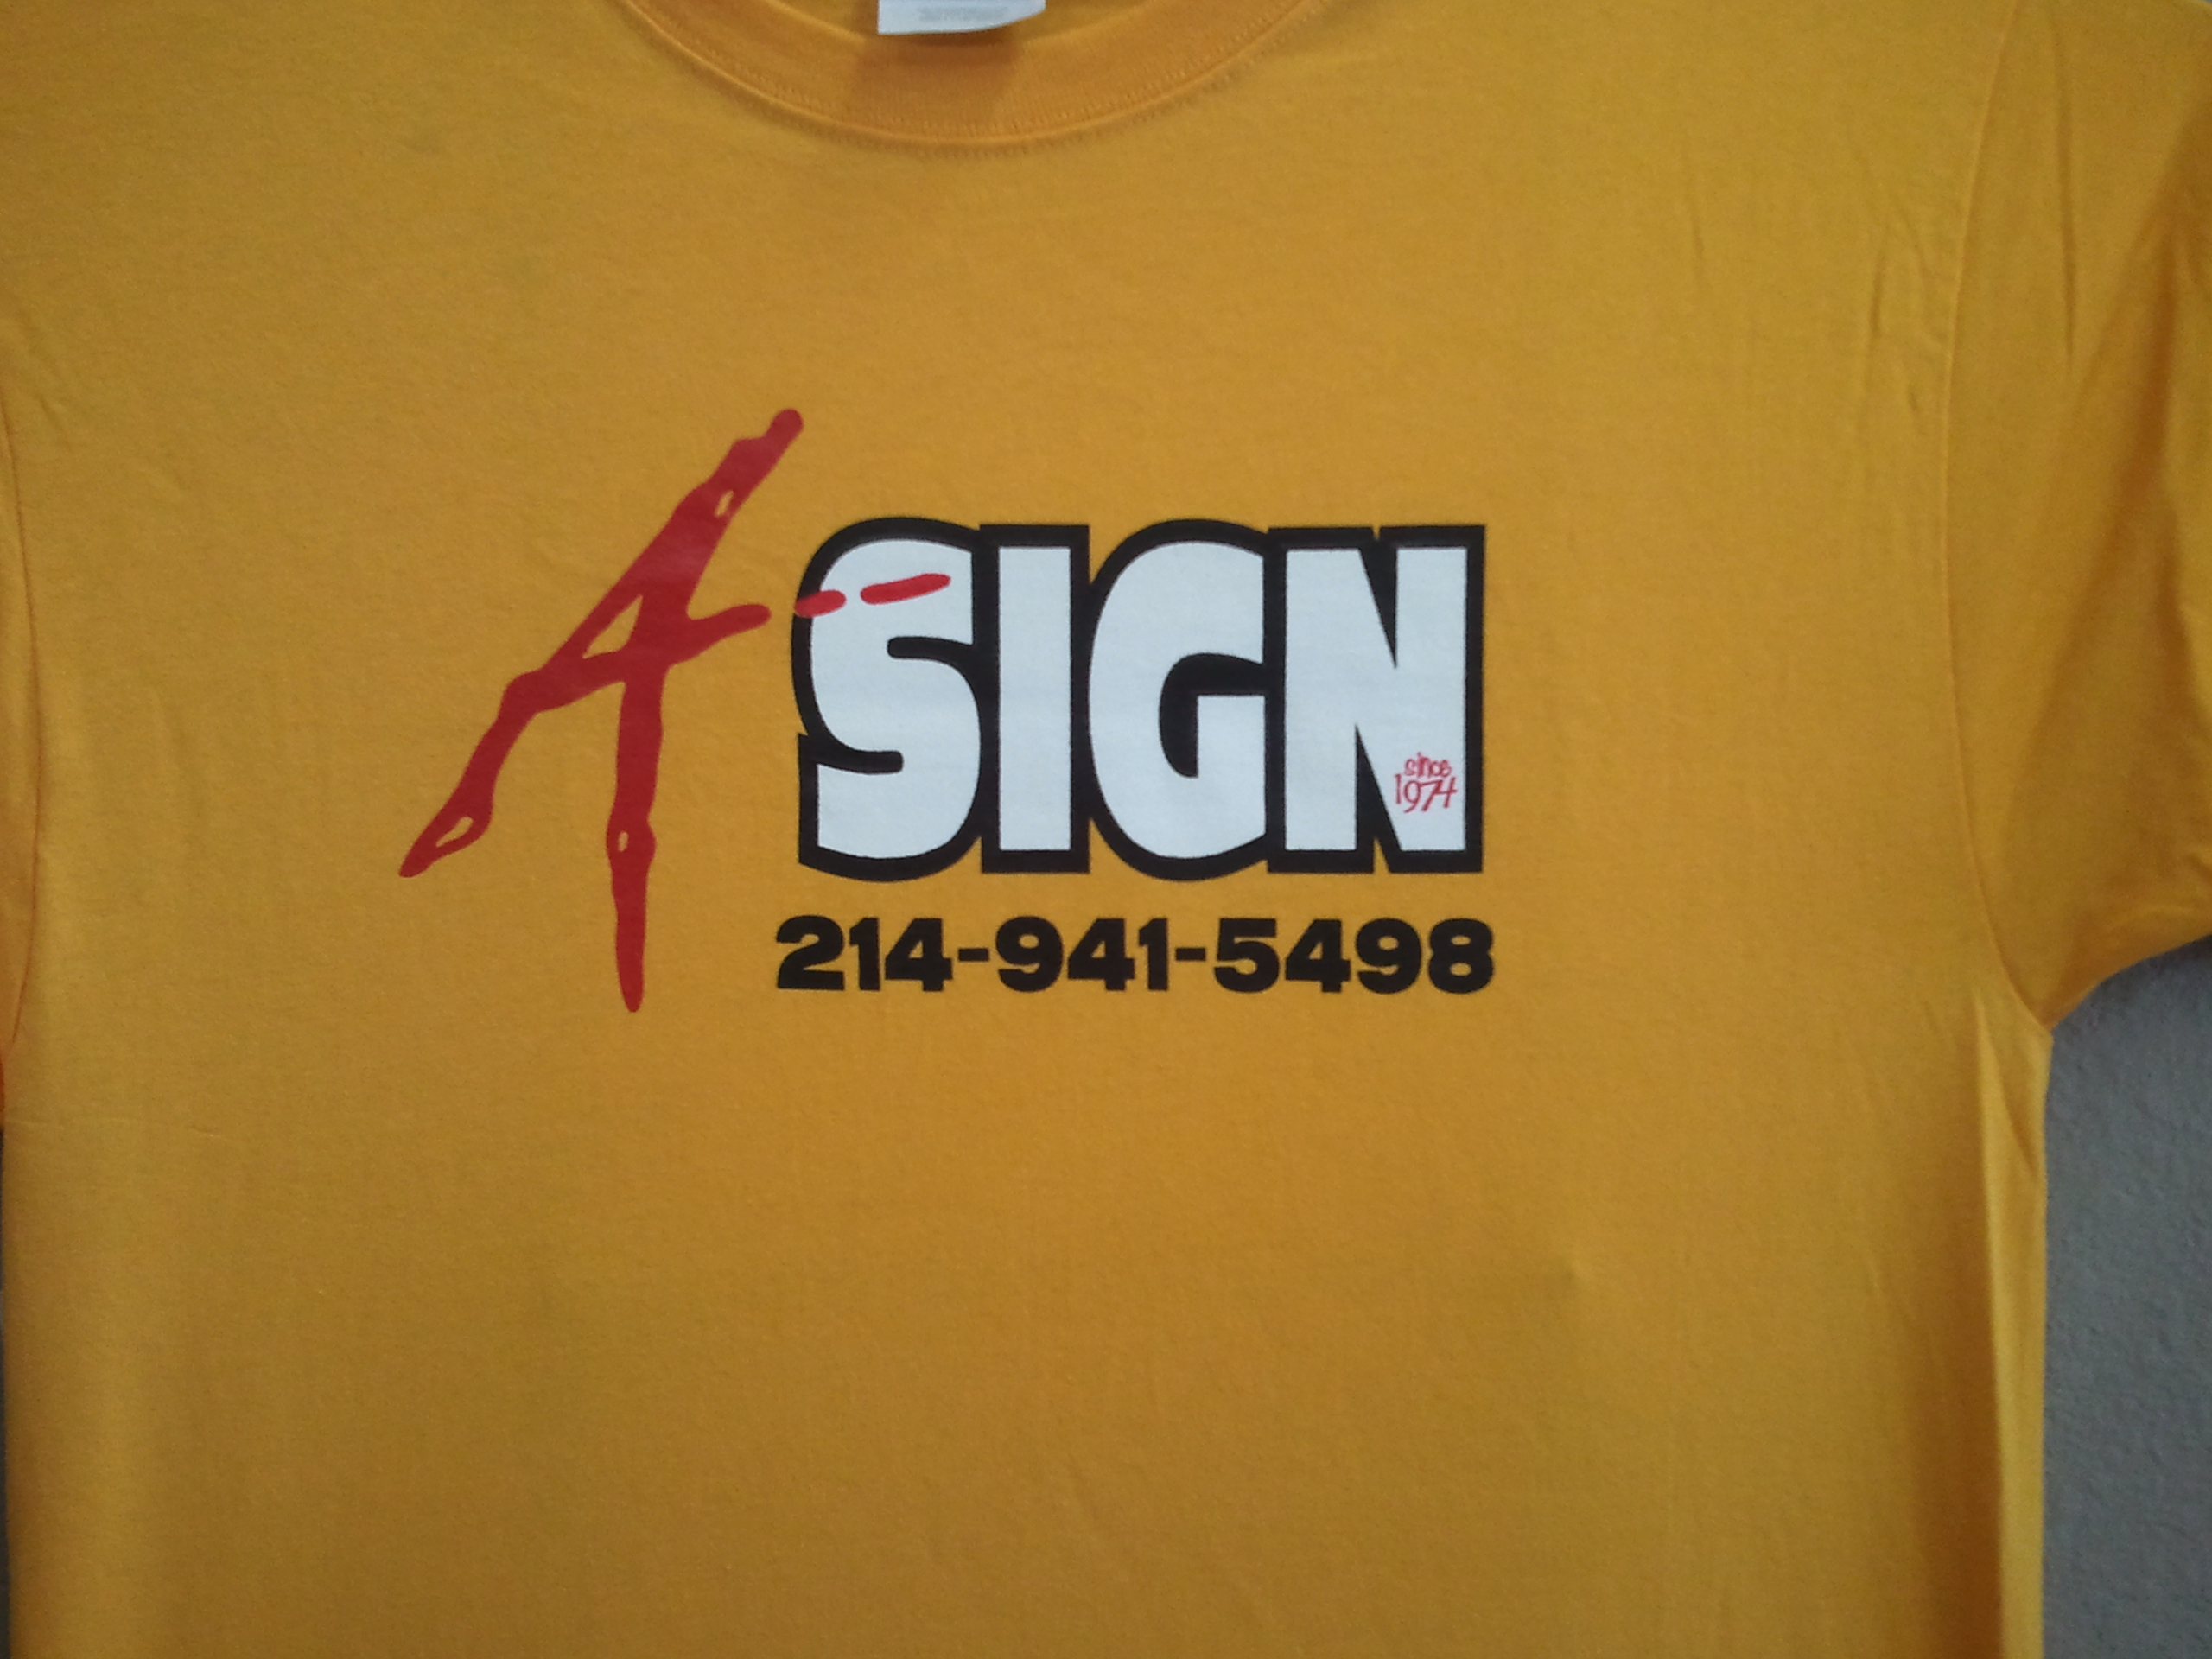 Signs/ASign.jpg